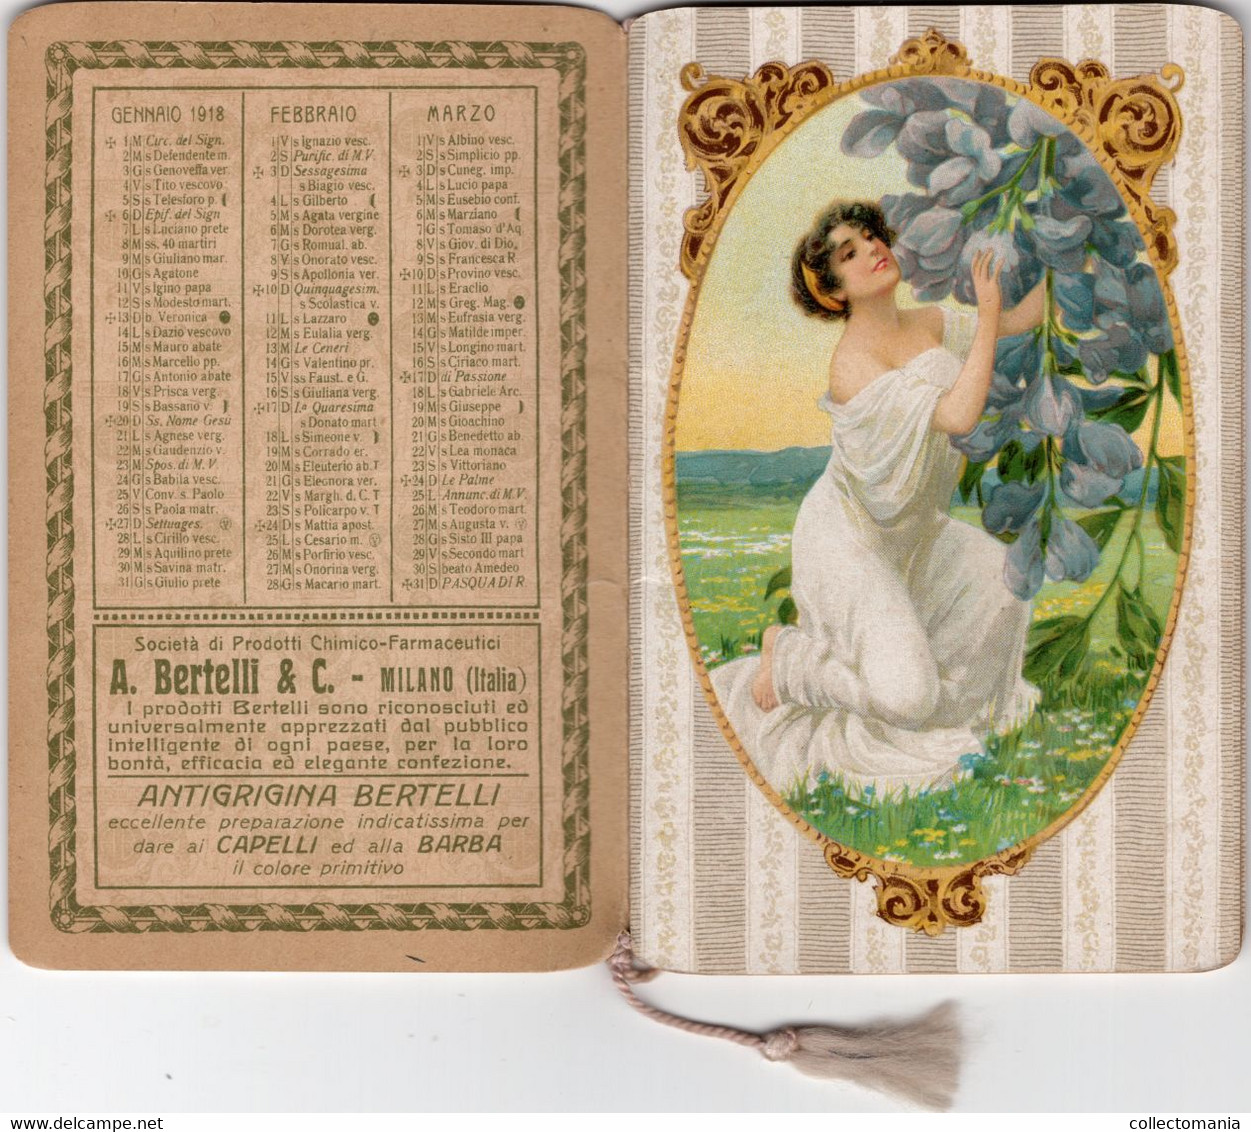 1 Carnet  Booklet  PARFUM Bertilli  Calendrier Almanacco 1918  Al Profumo Rosa  Bertelli - Zonder Classificatie